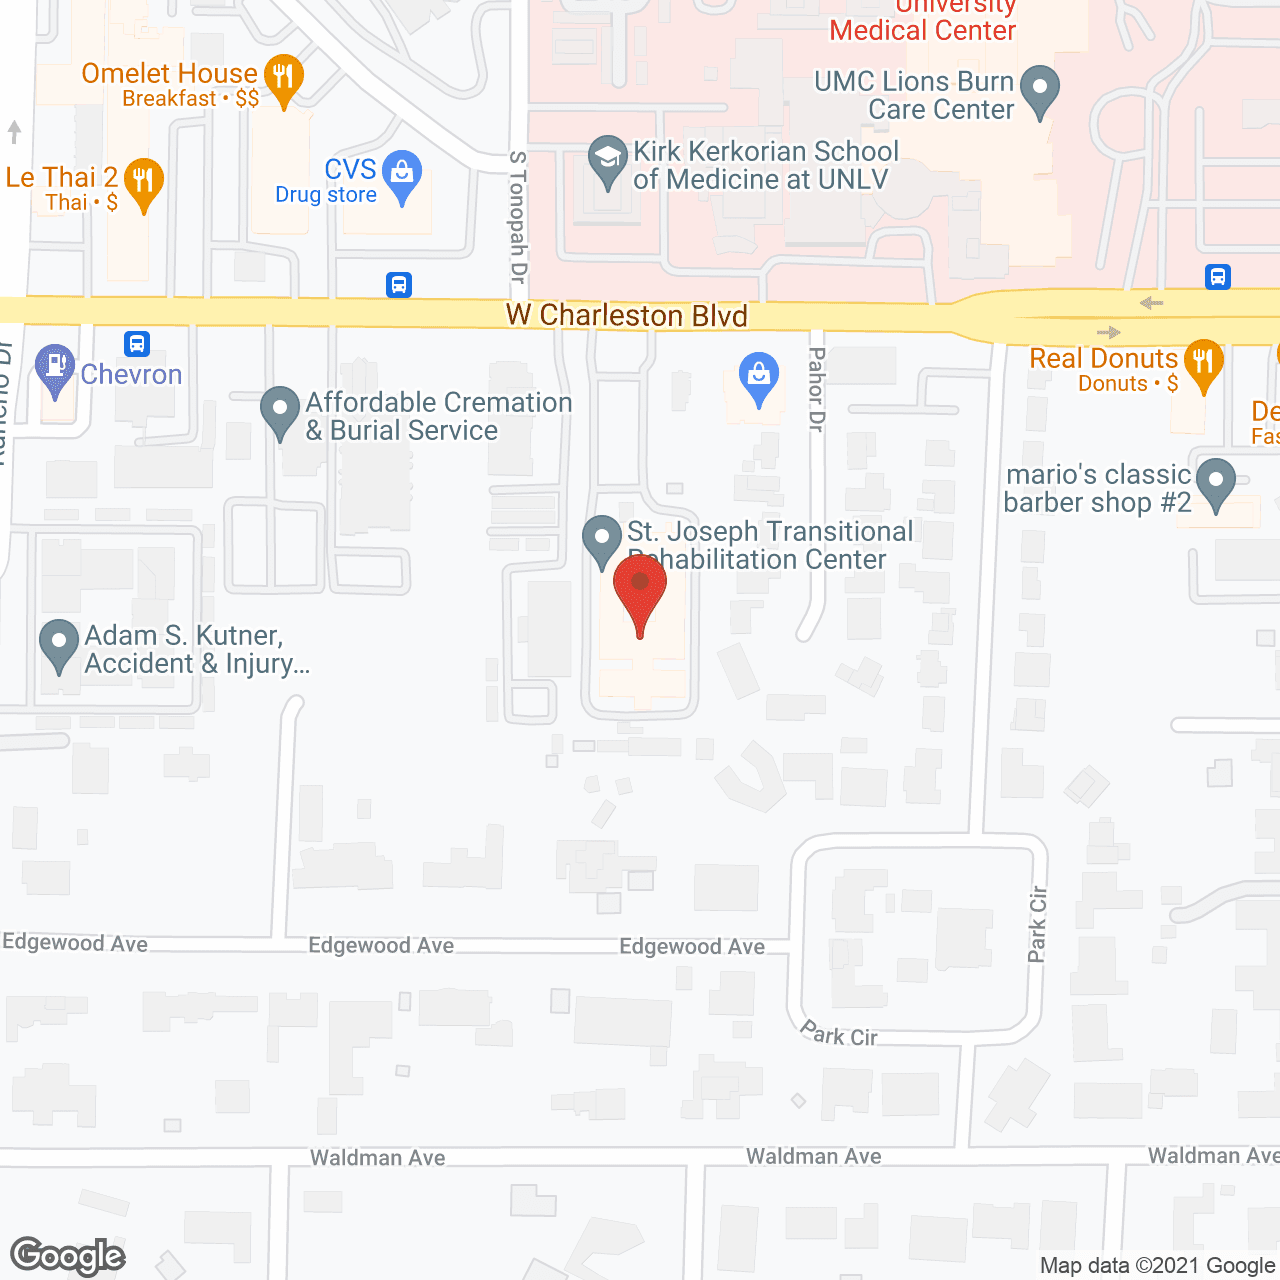 St. Joseph Transitional Rehabilitation Center in google map